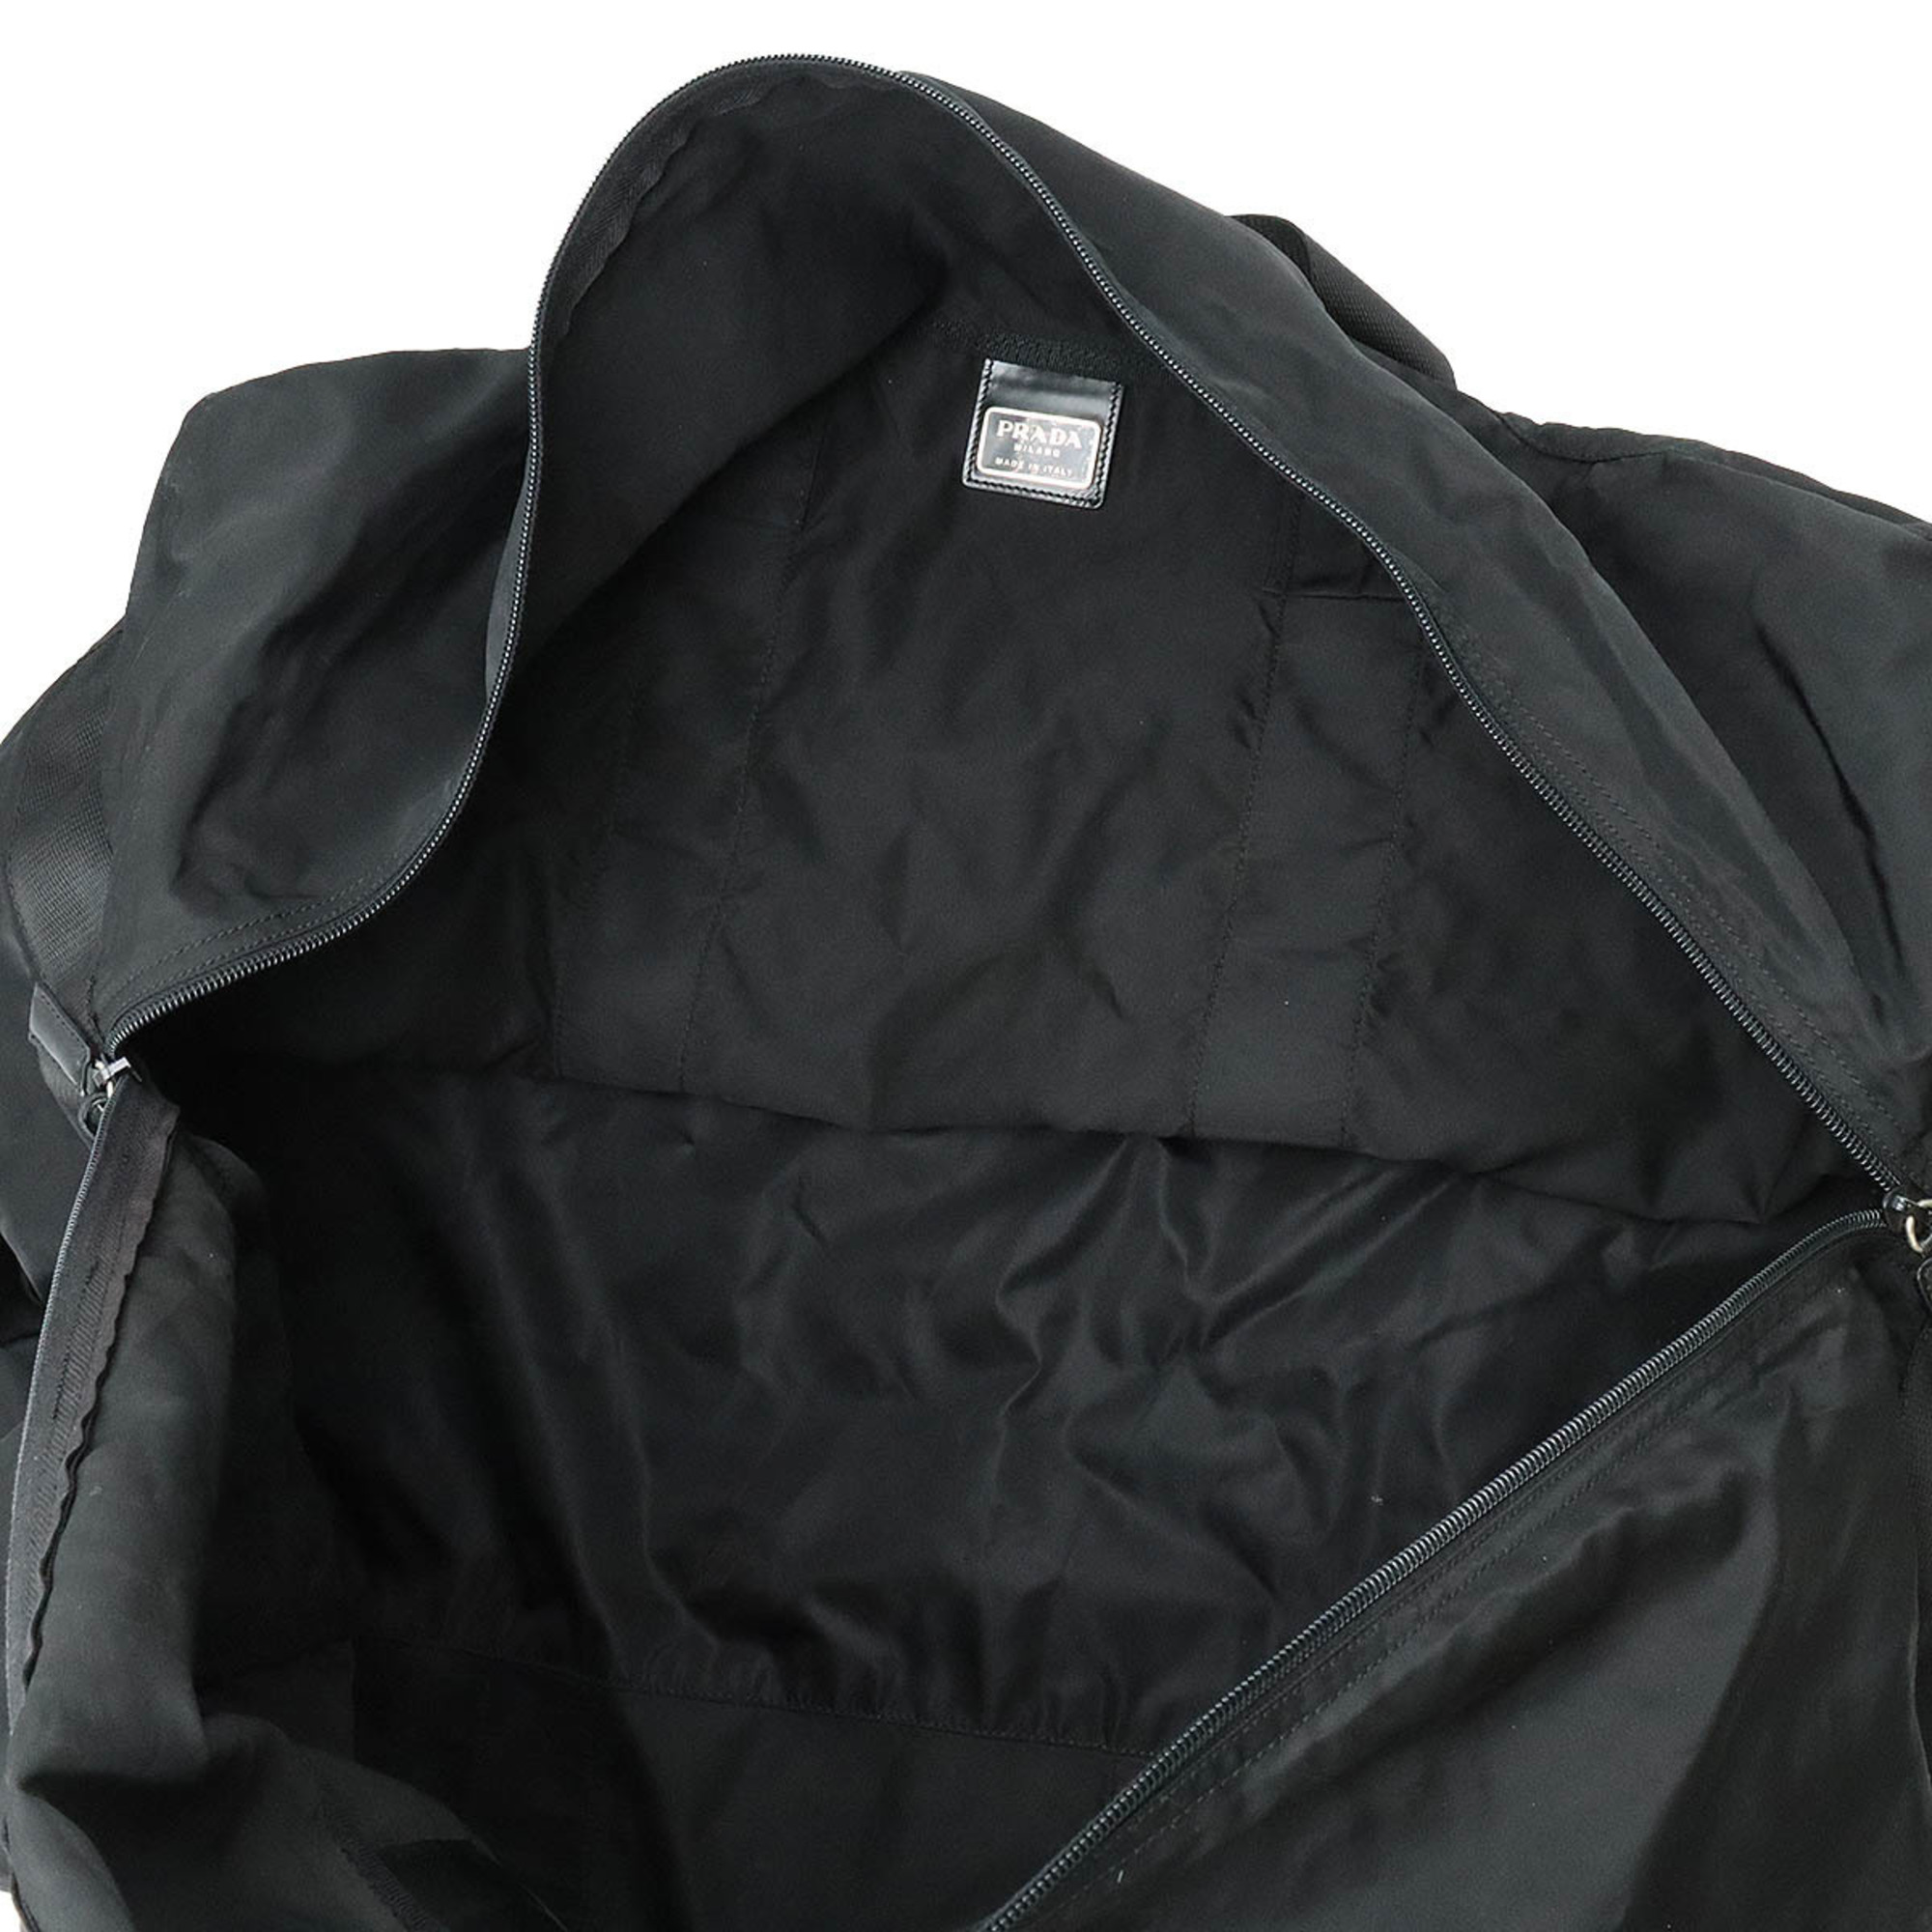 PRADA Prada Boston bag, travel nylon, leather, NERO, black